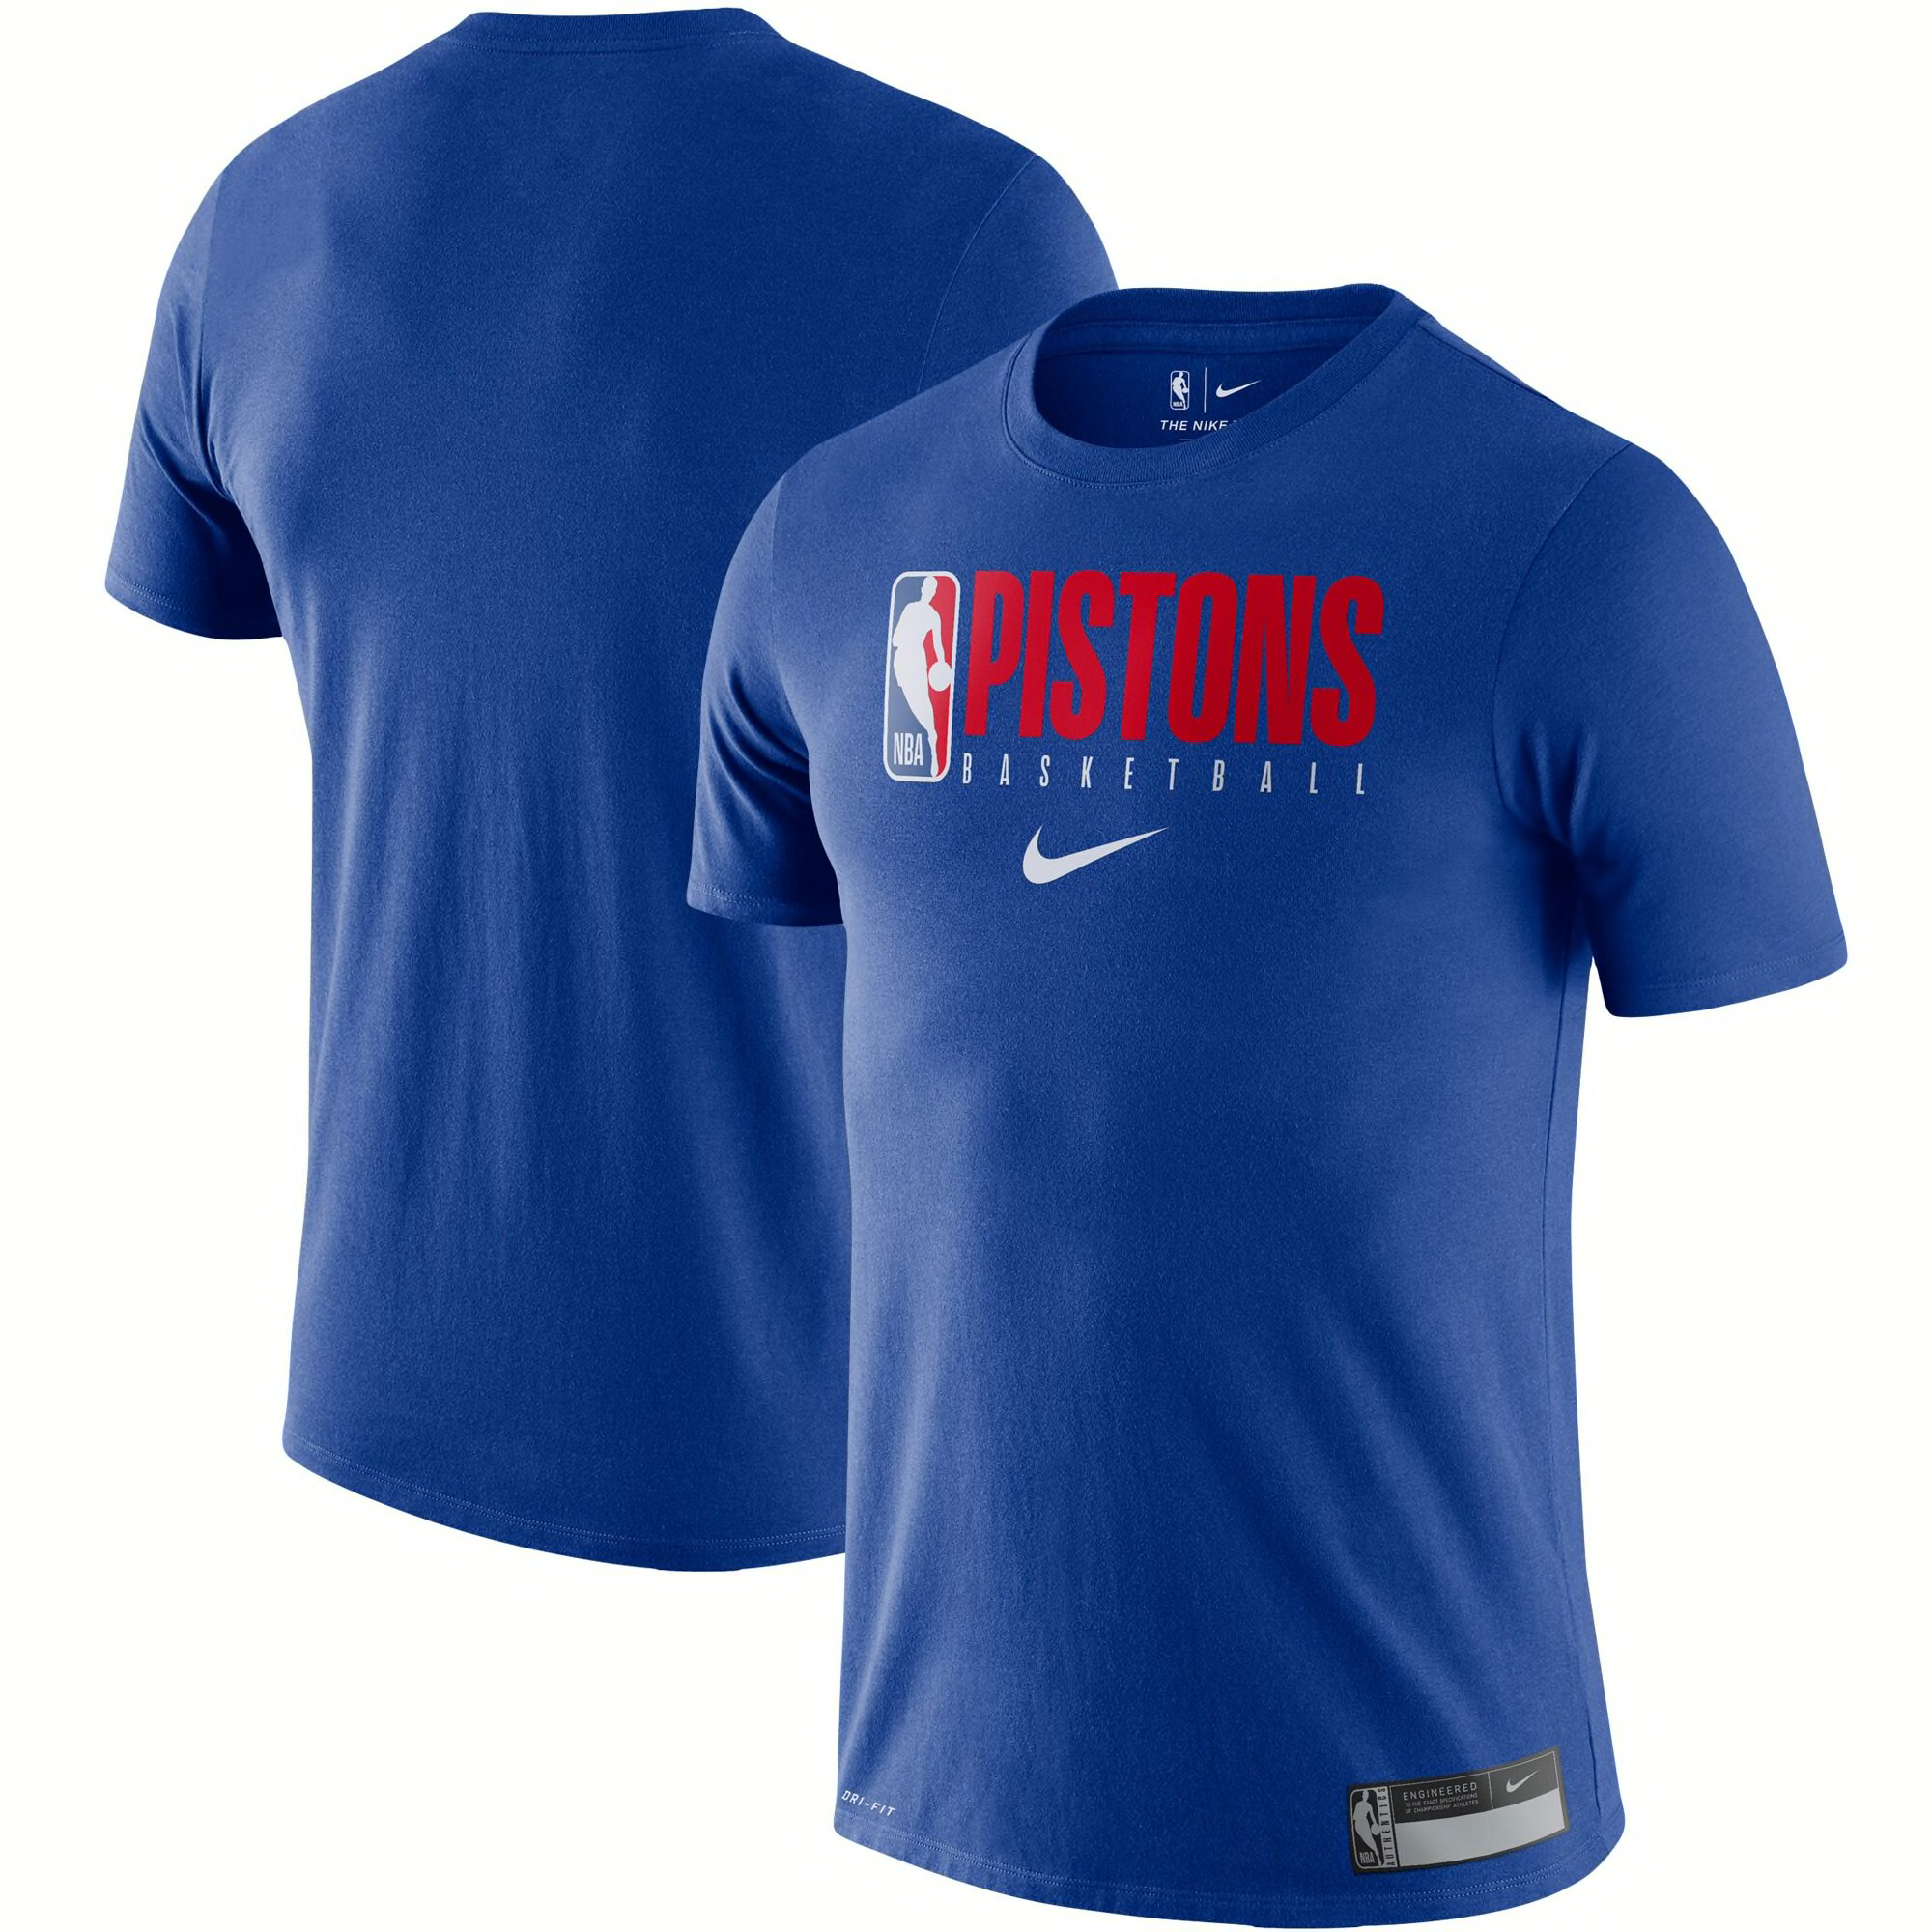 Nike Dry Logo Detroit Pistons T-shirt